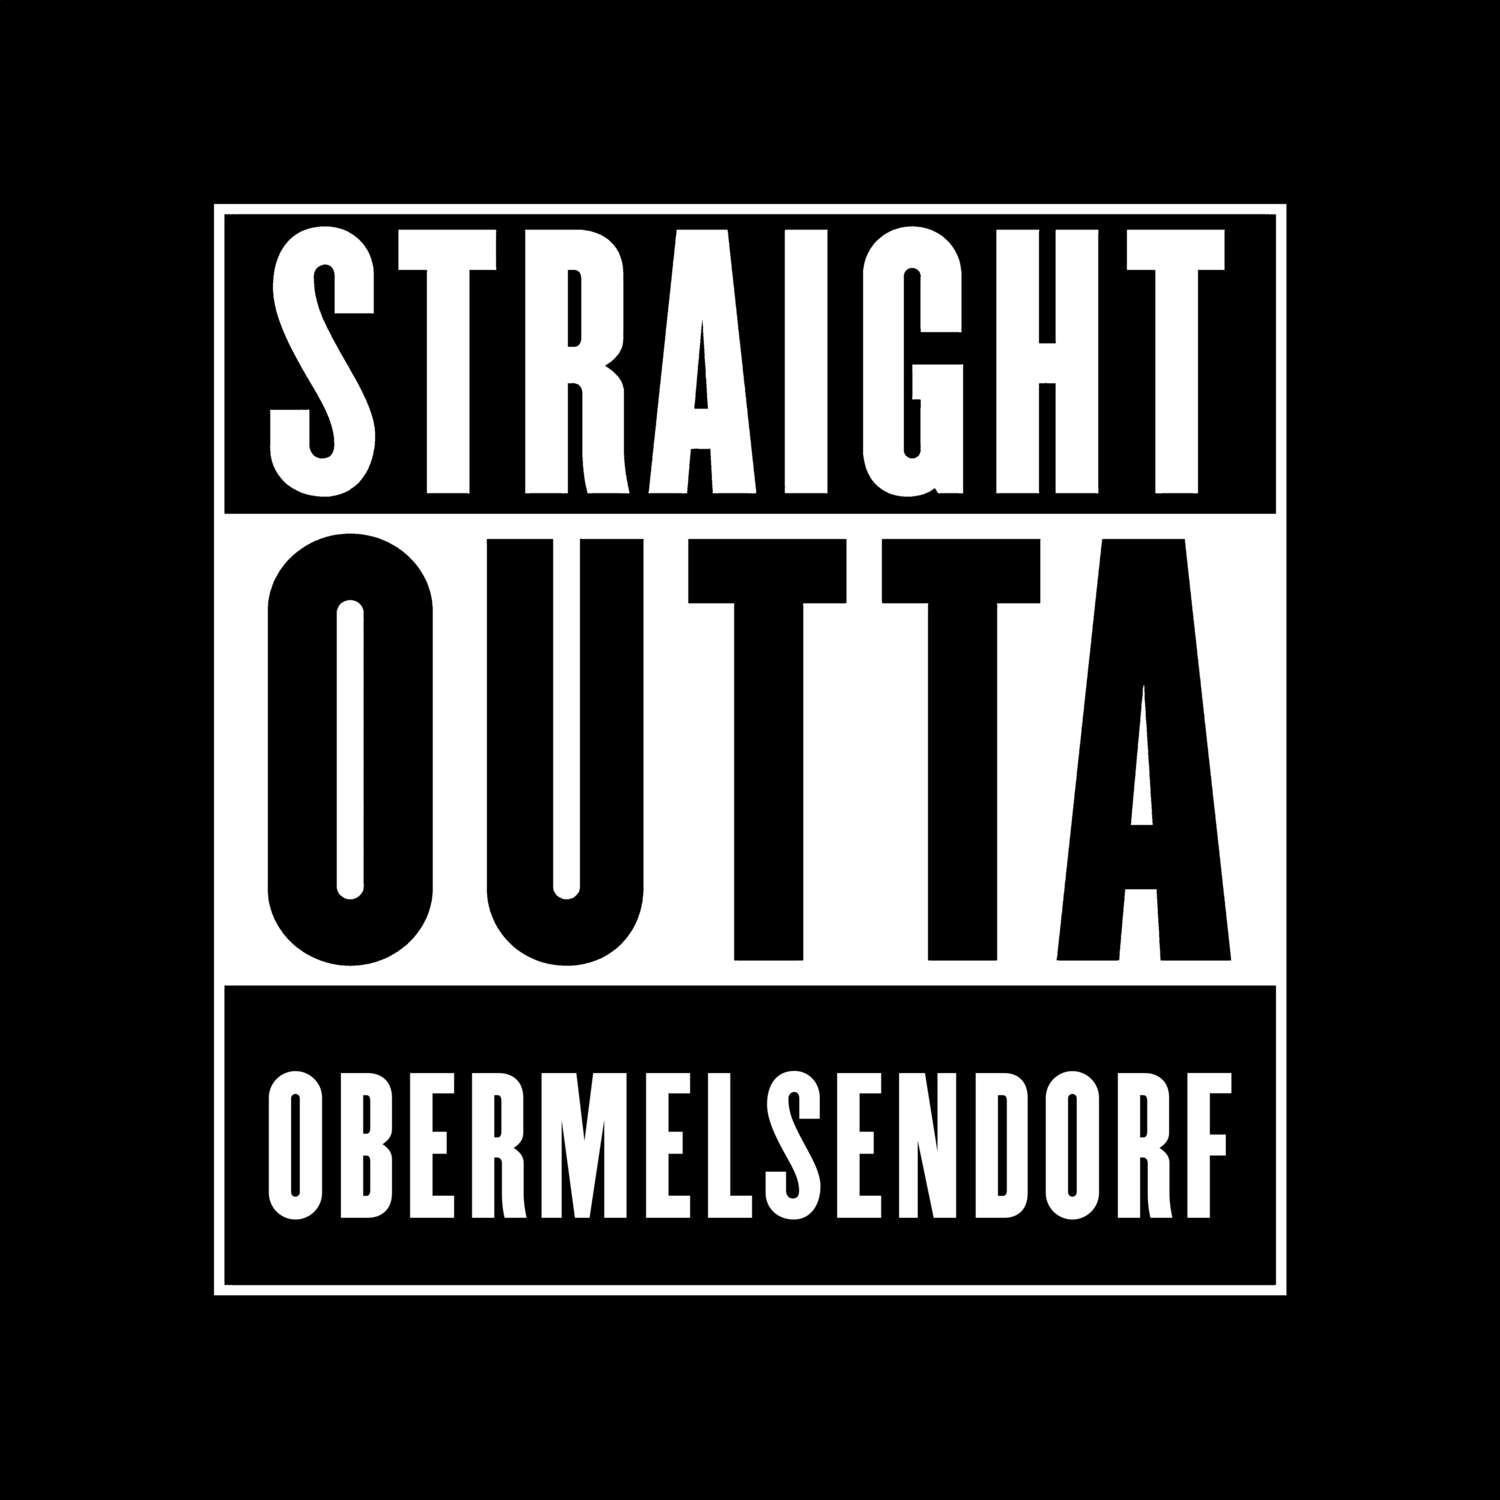 Obermelsendorf T-Shirt »Straight Outta«